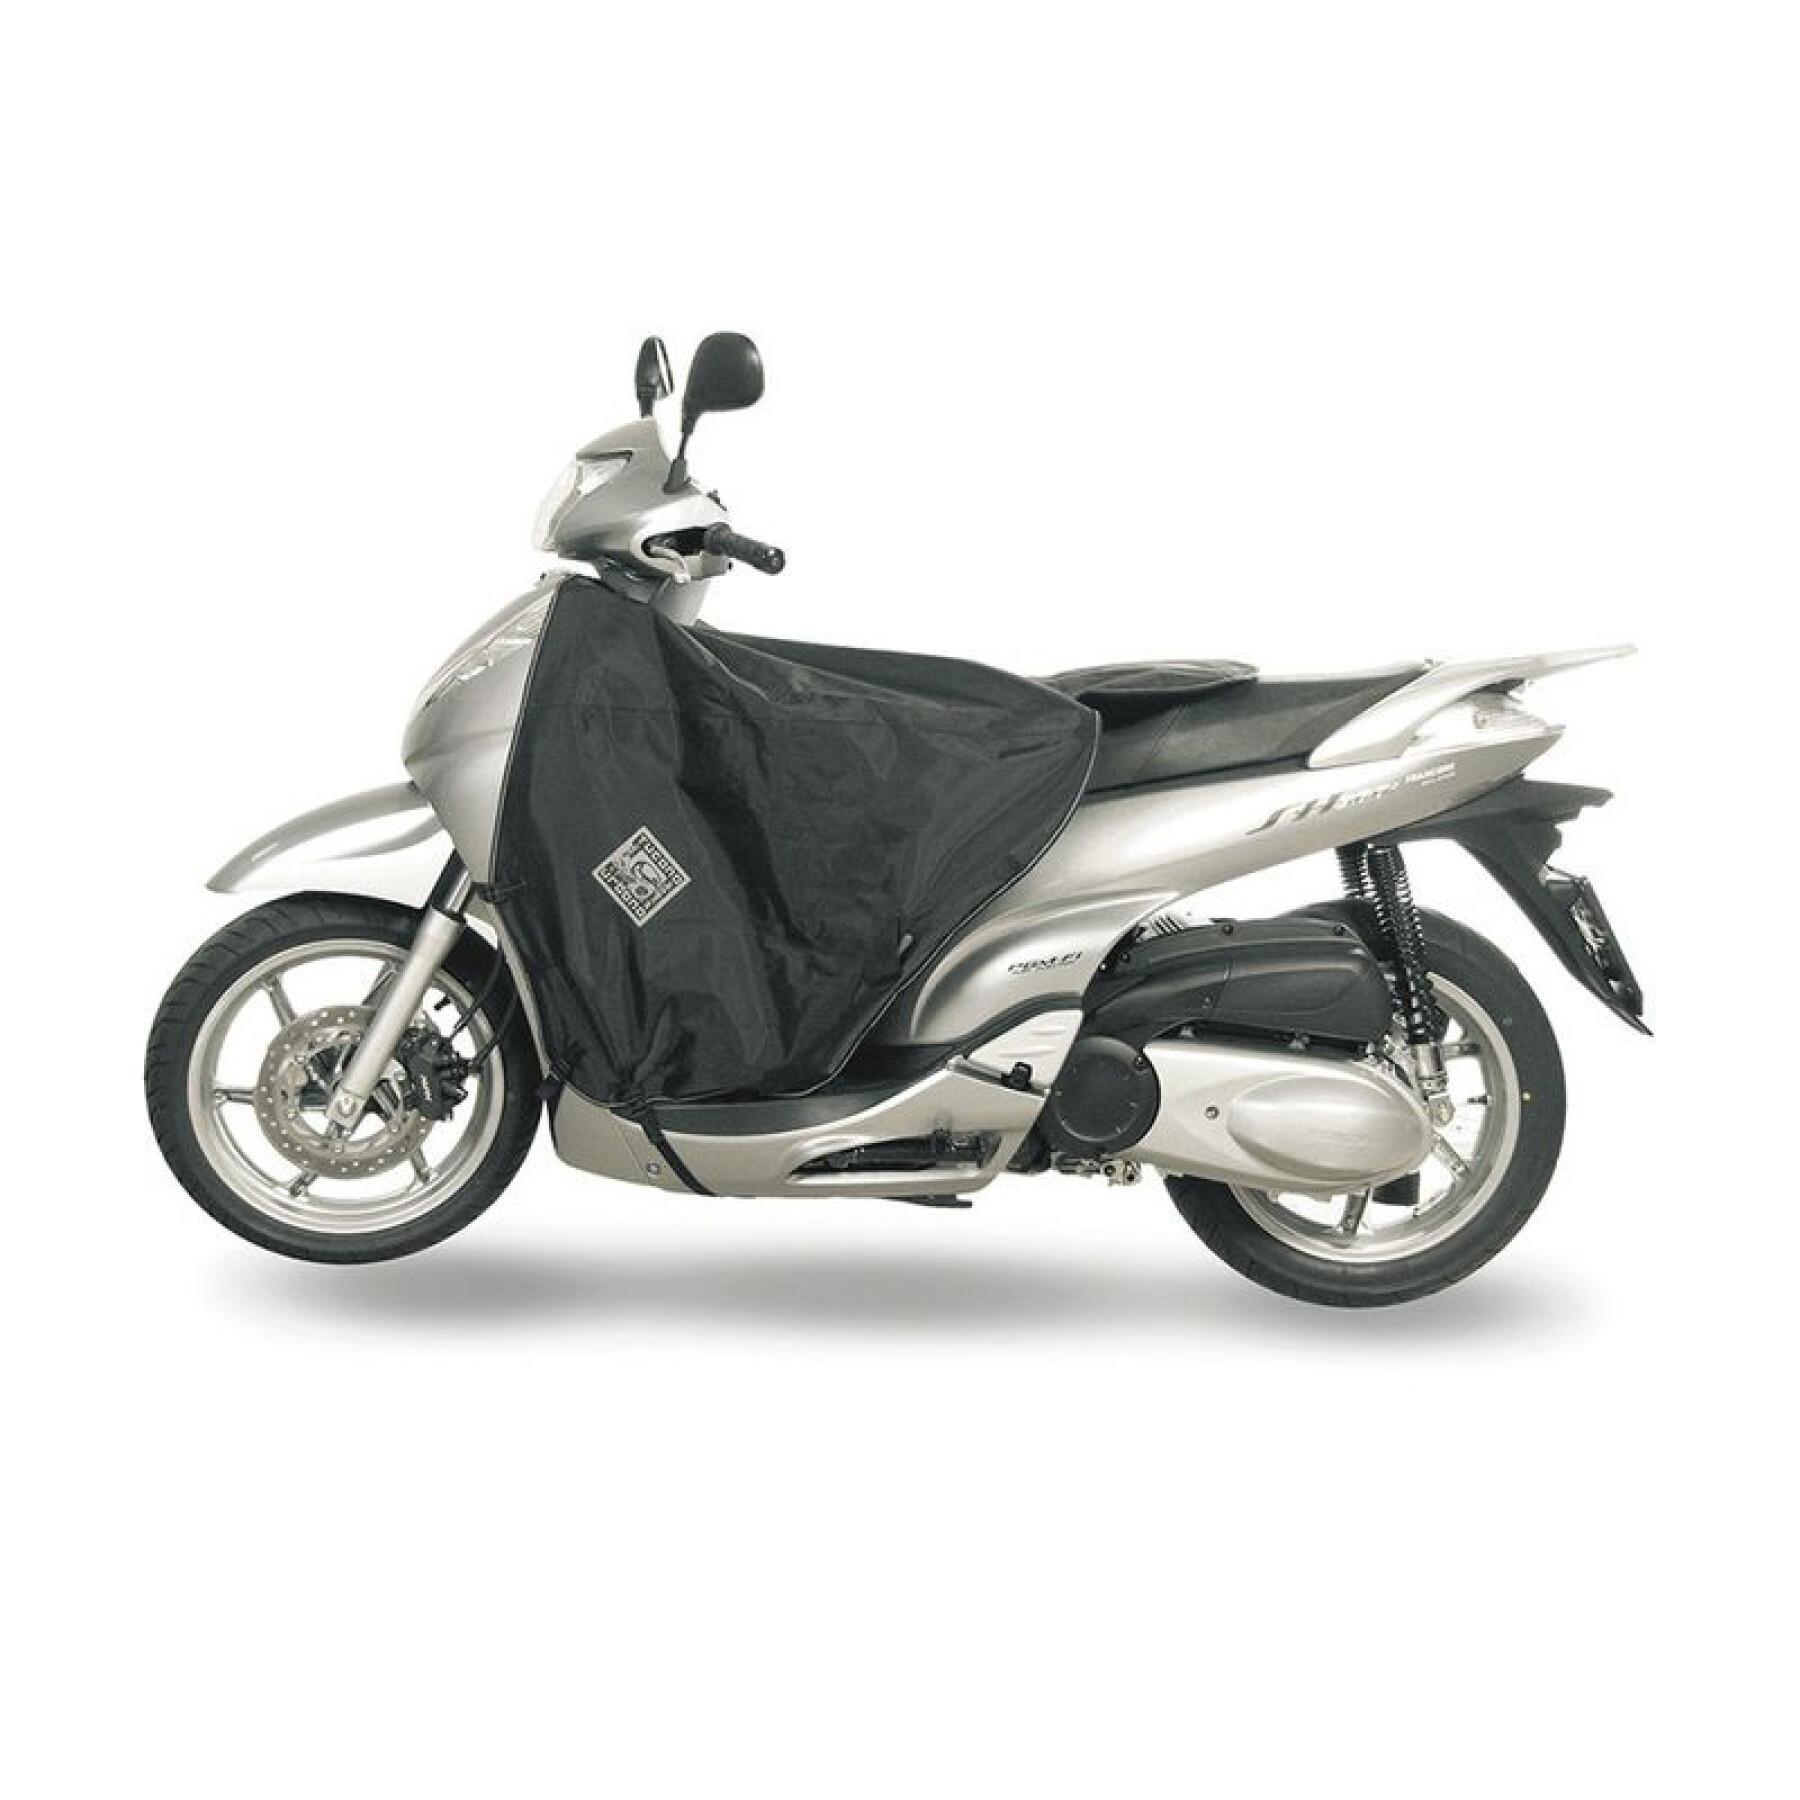 Tablier scooter Tucano Urbano Termoscud Honda Sh 300 (jusqu'en 2010)